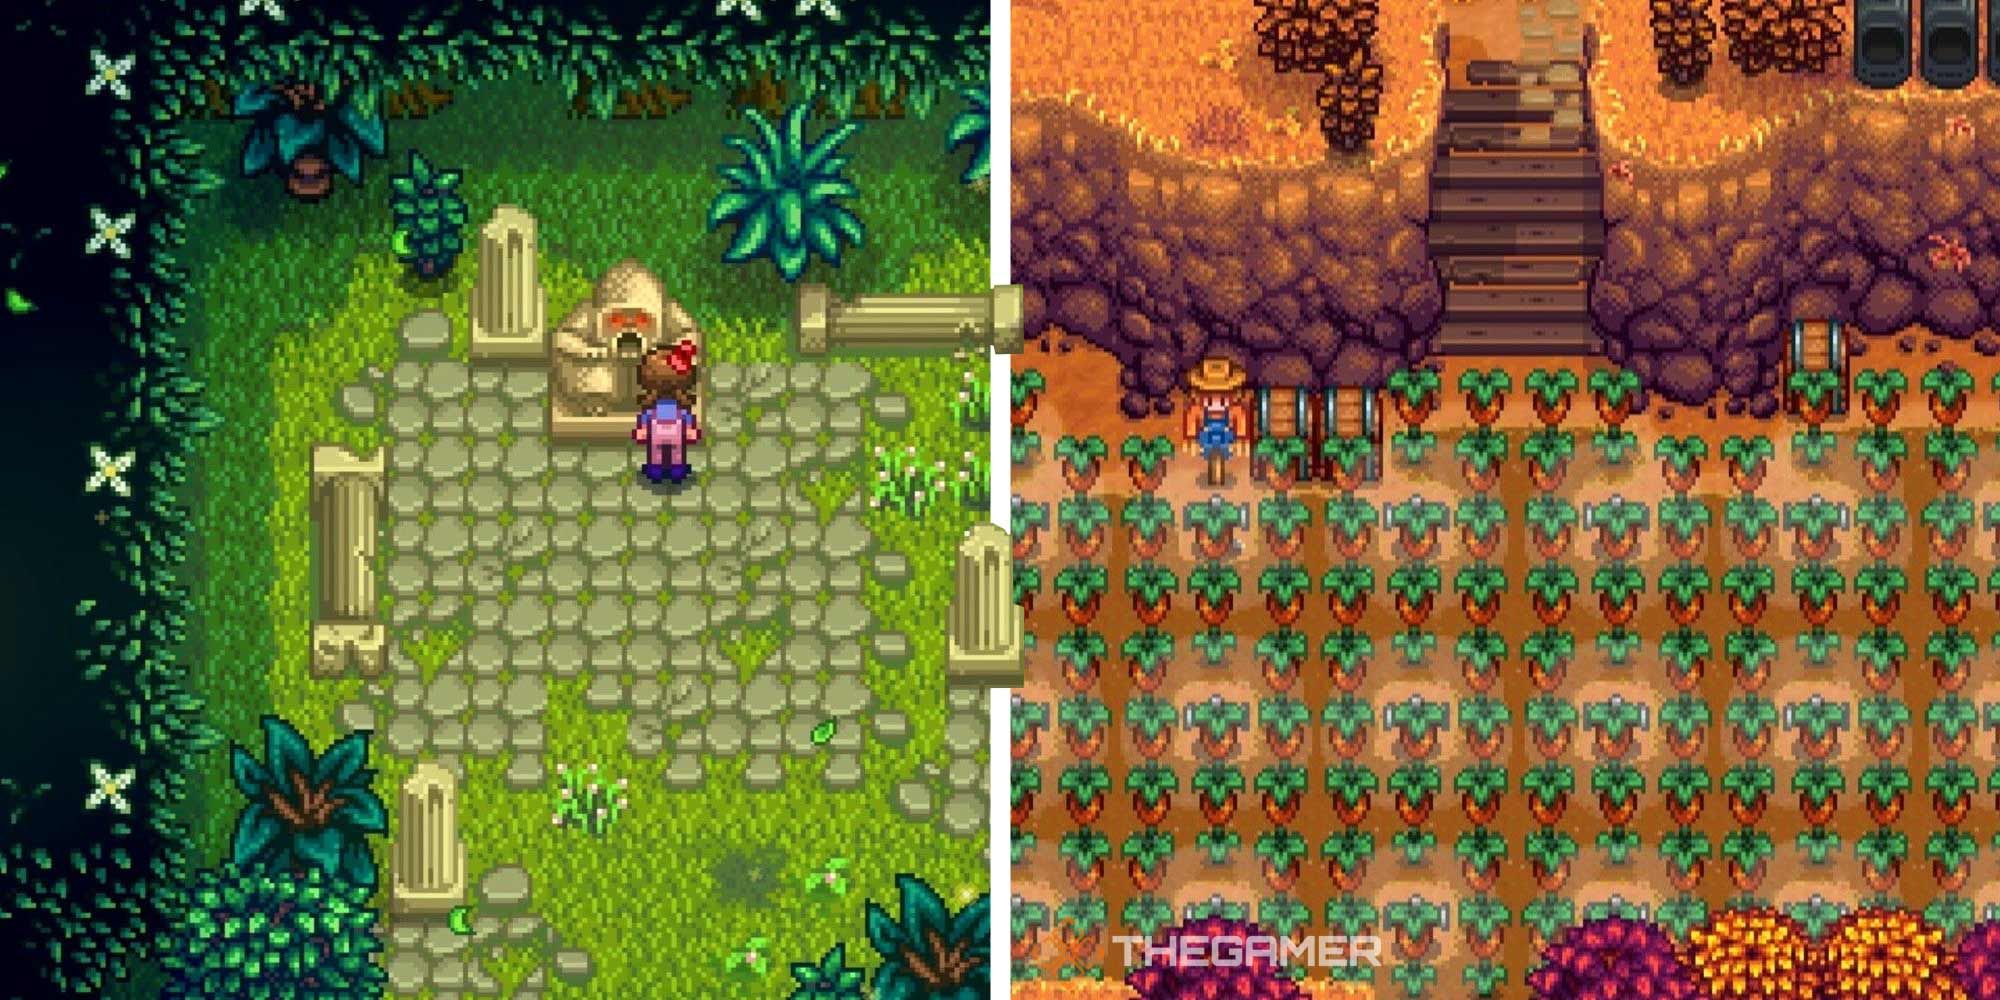 Split image of Secret Woods and Gem Berry Farm